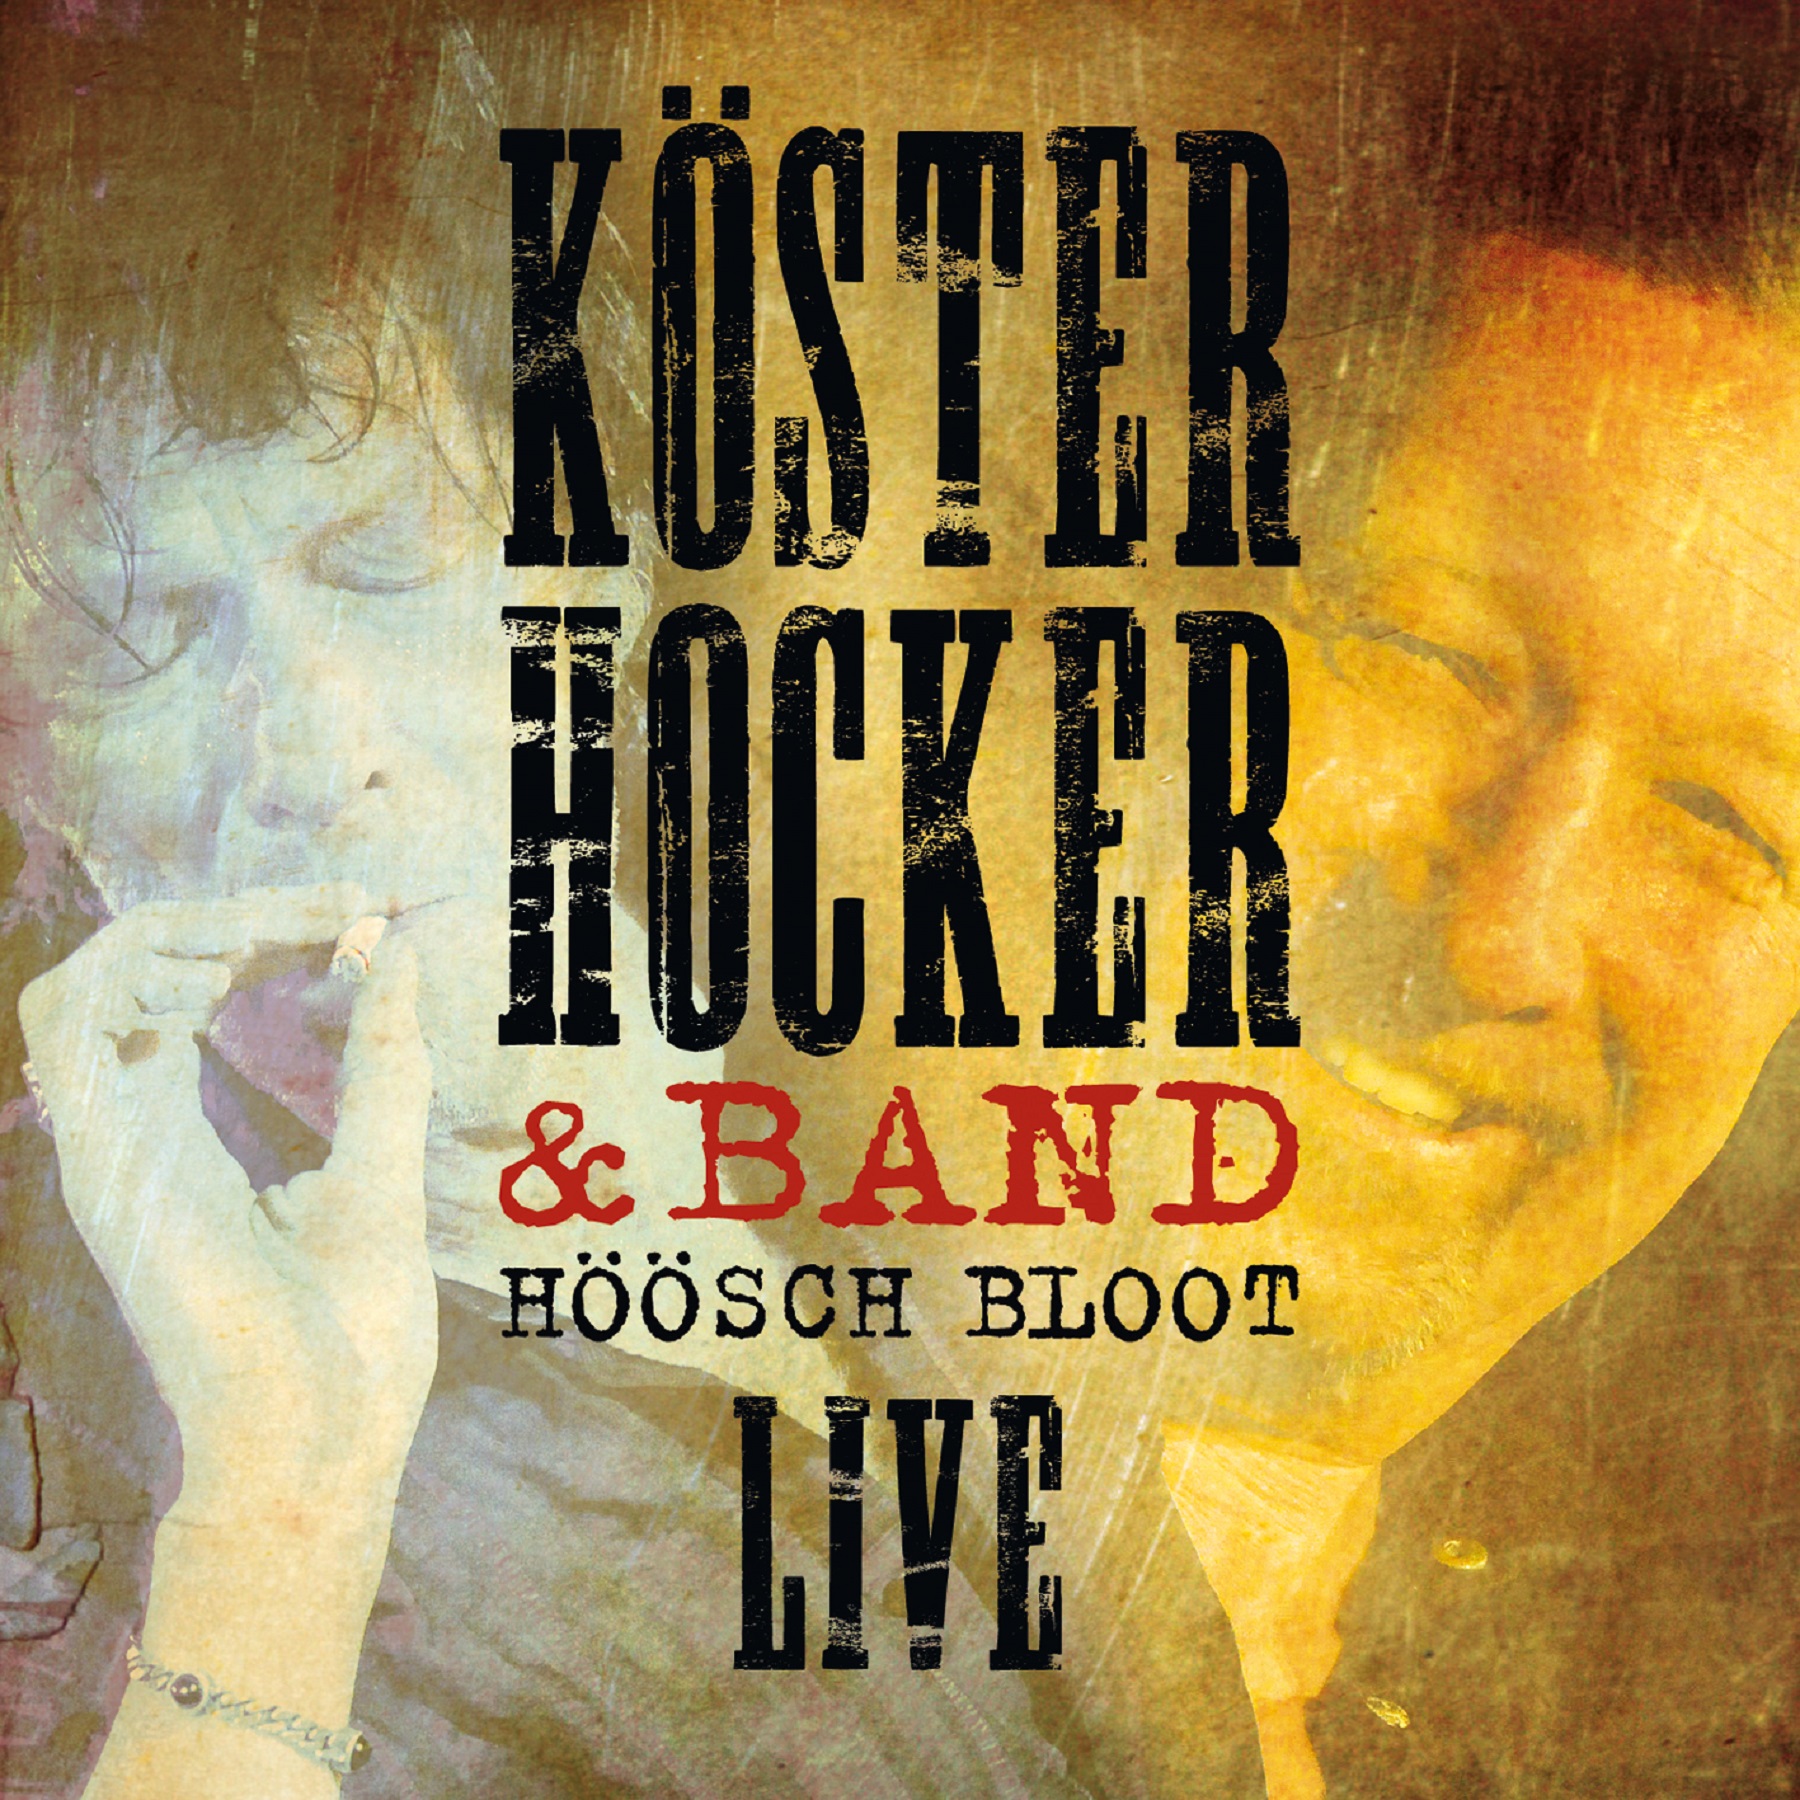 Köster, Hocker & Band - Höösch Bloot Live